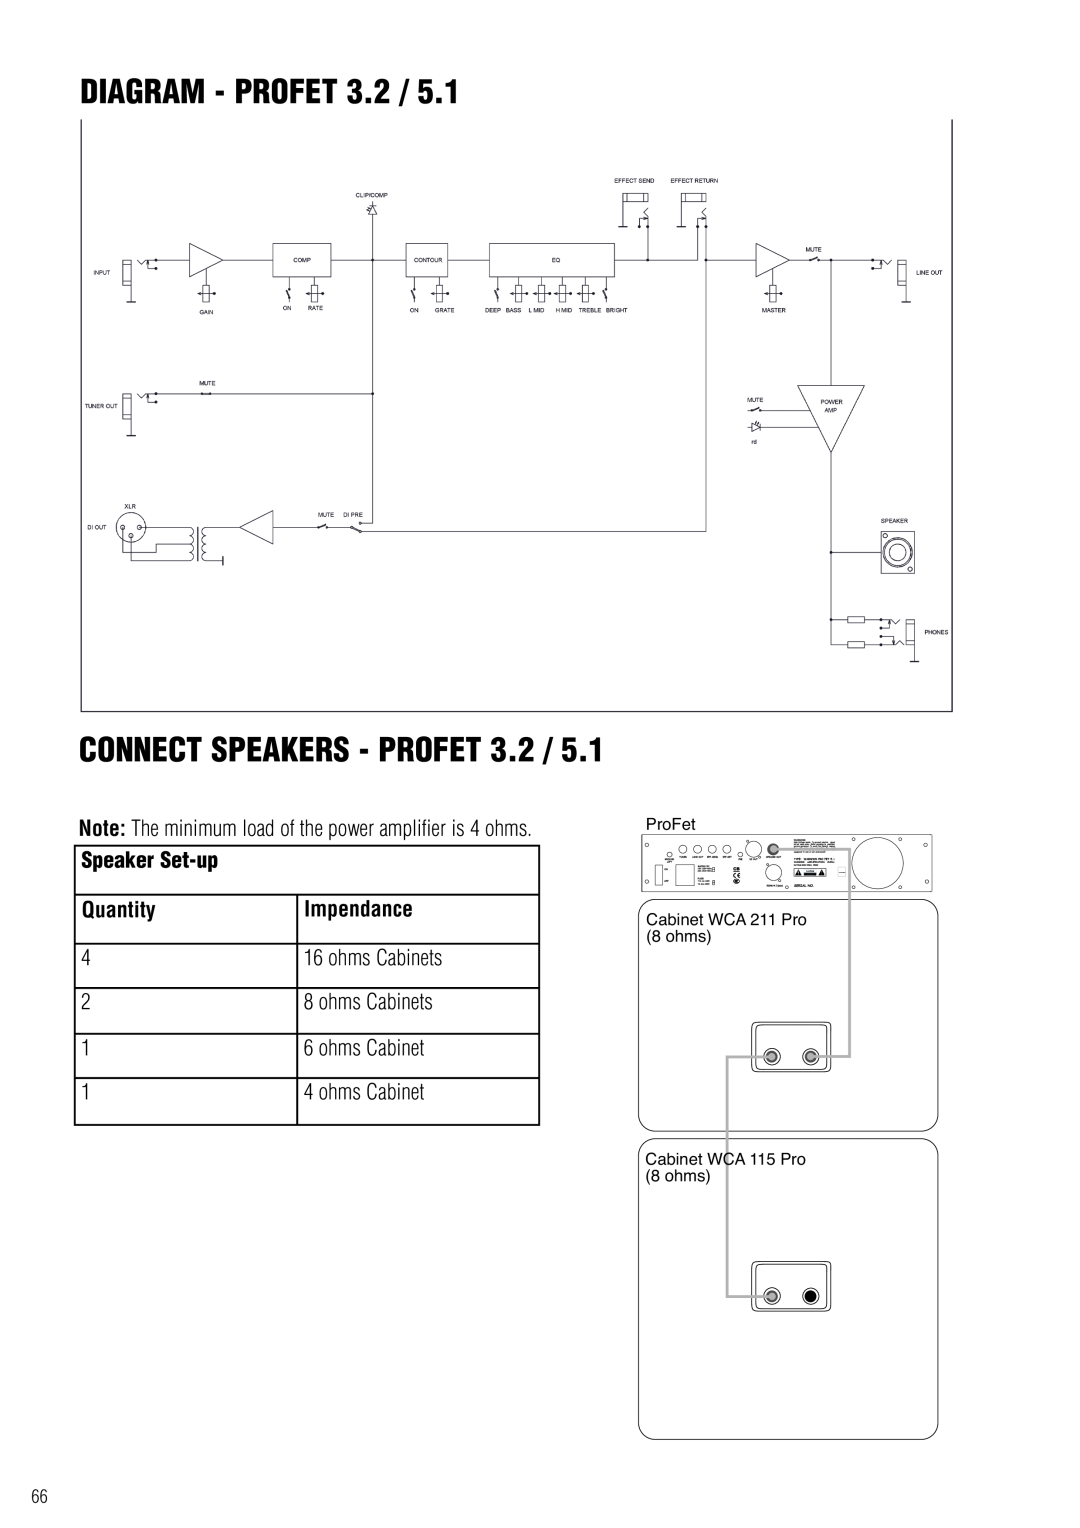 Warwick 3.3 / 5.2 Diagram - Profet, Connect Speakers - Profet, Speaker Set-up, Quantity, Impendance, Cabinet WCA 211 Pro 